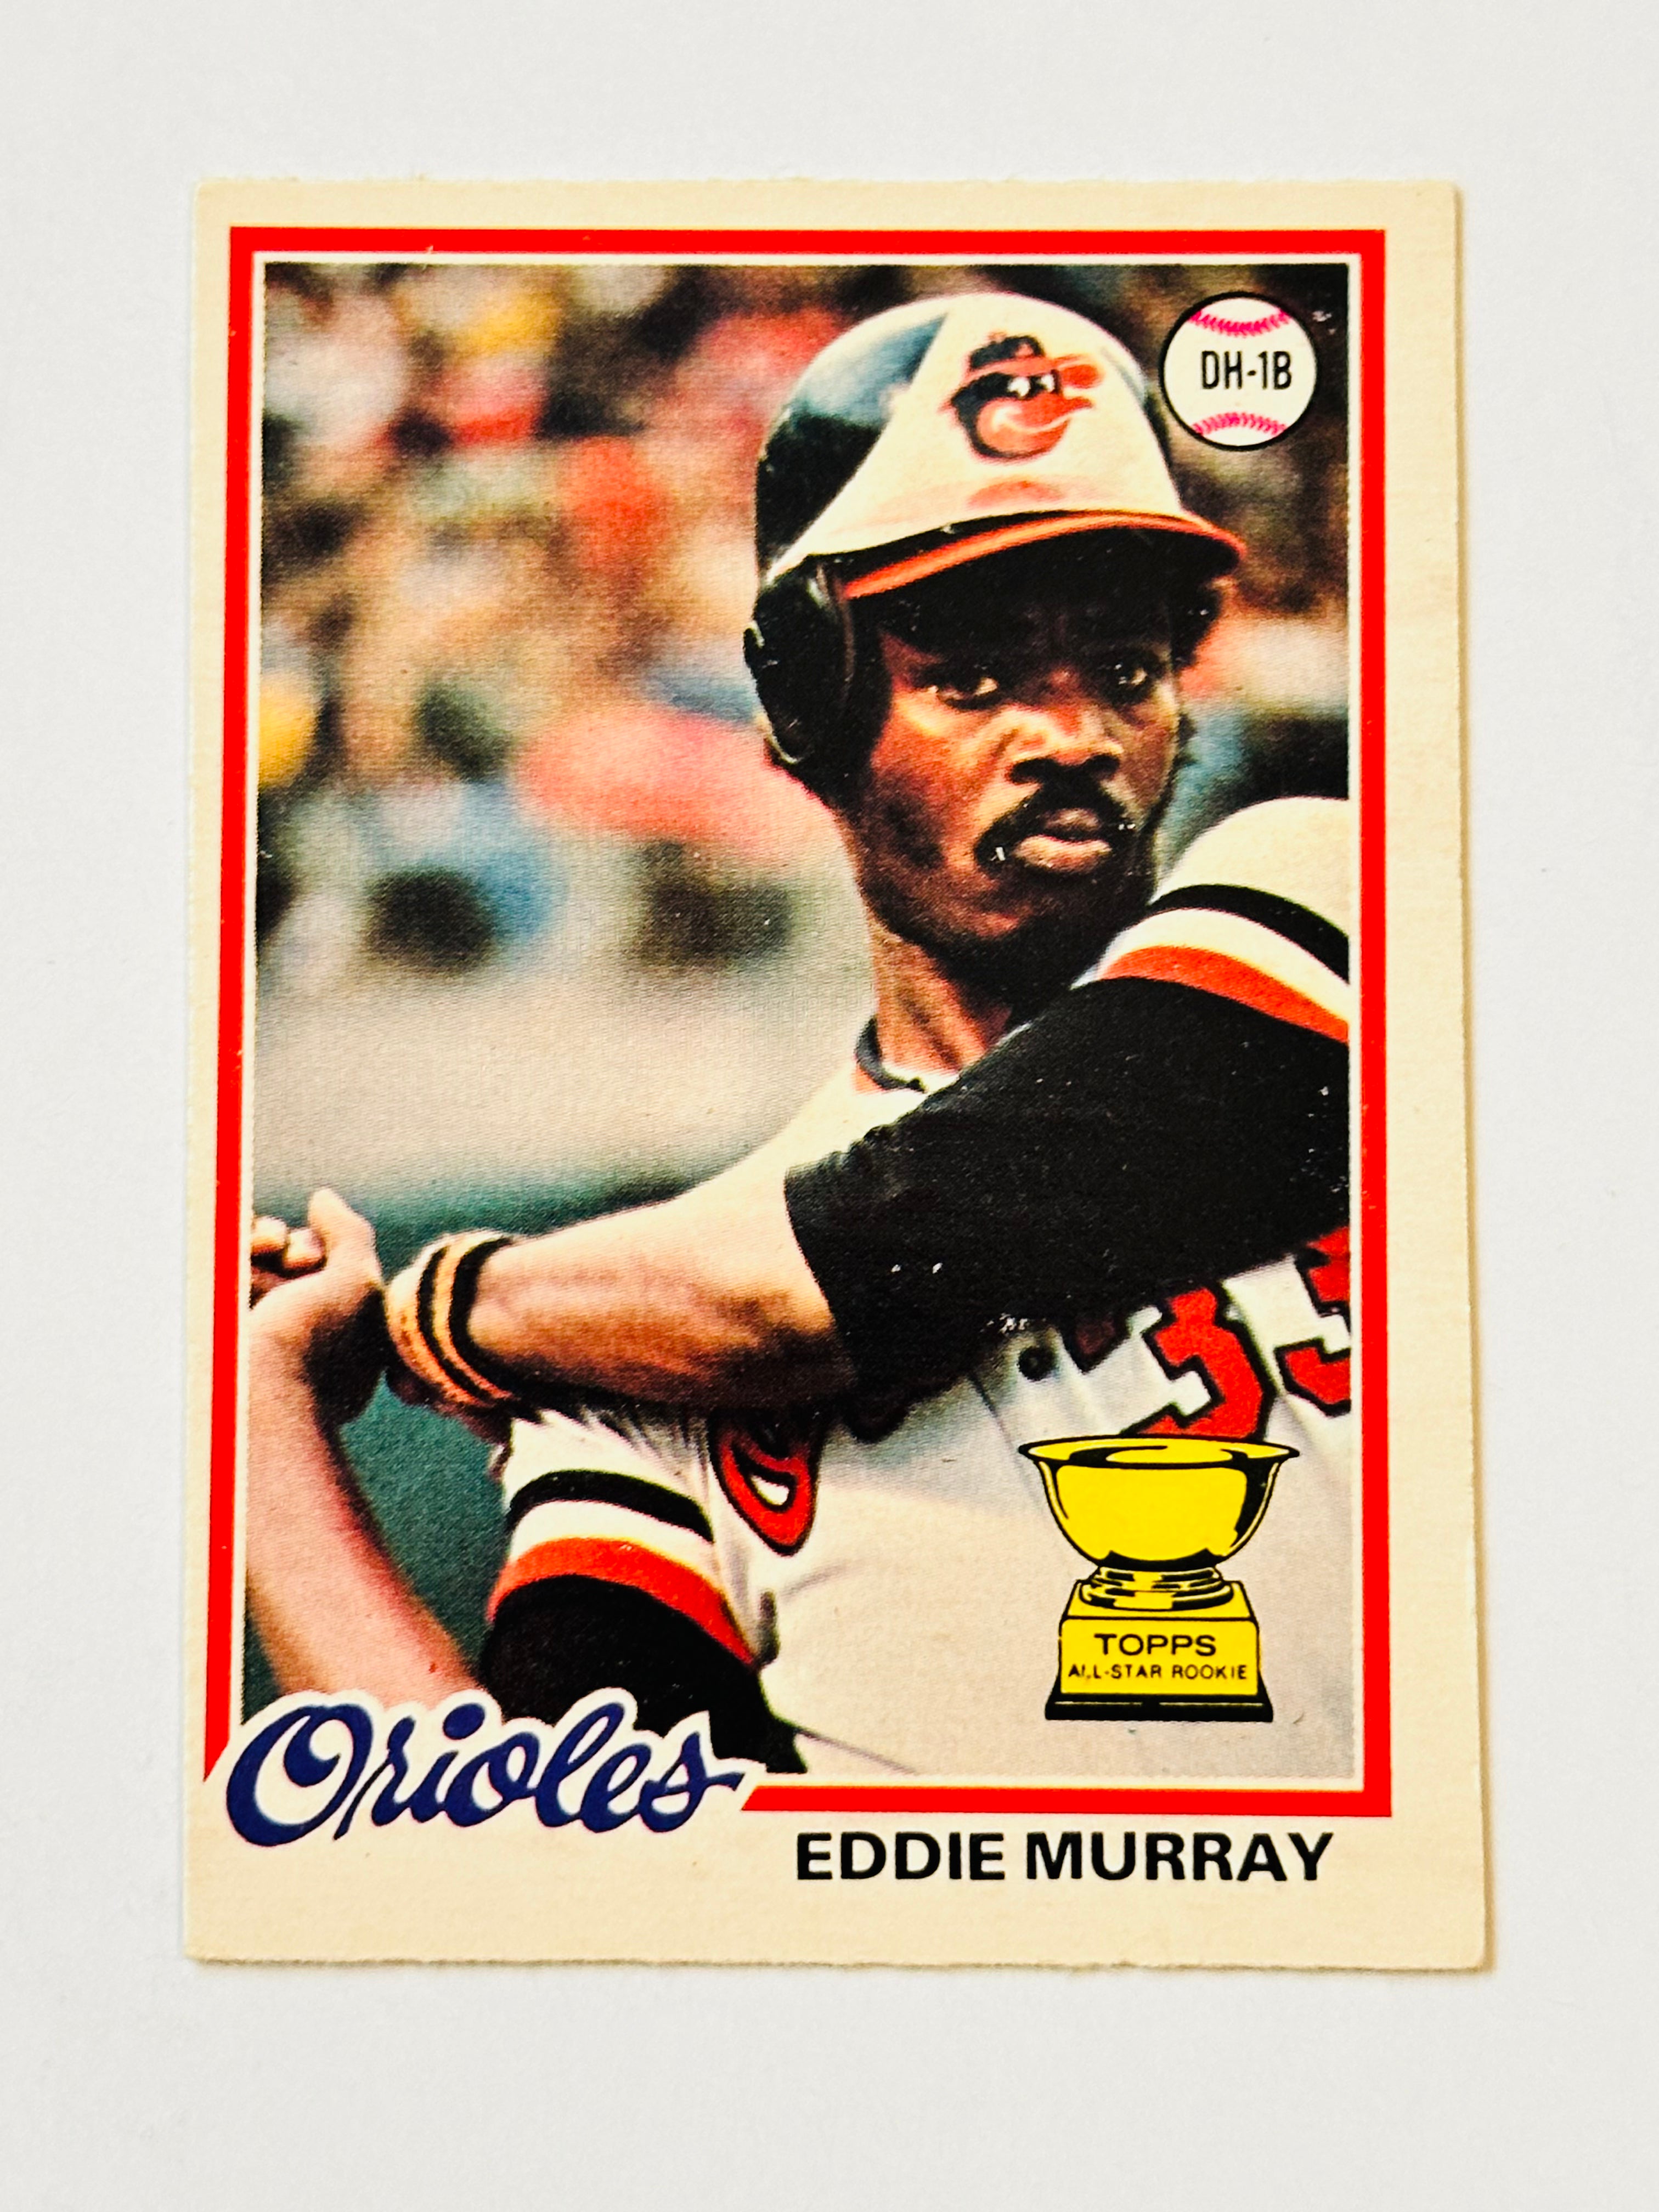 Eddie Murray Opc Canadian rarer version high grade baseball rookie card 1978